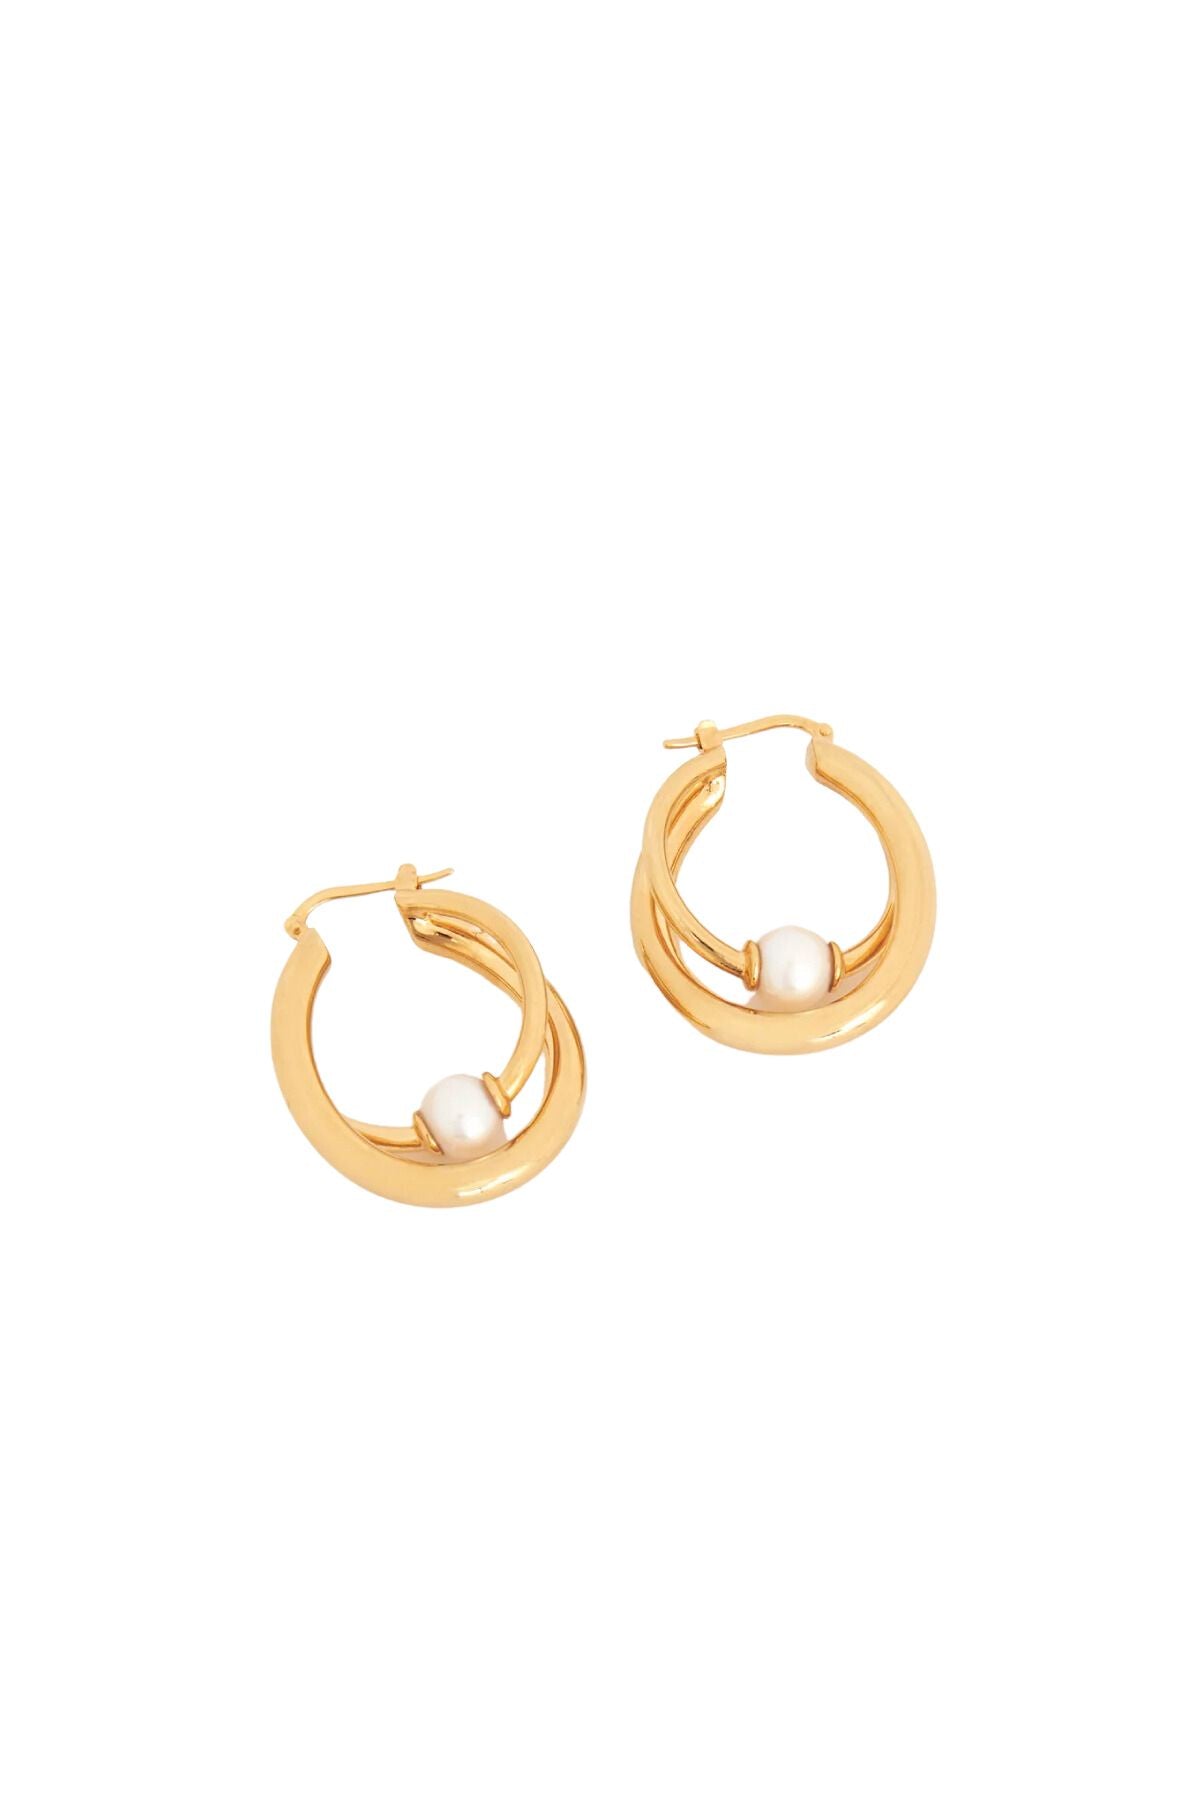 Chloé Darcey Pearl Double Hoop Earrings - Bright Gold